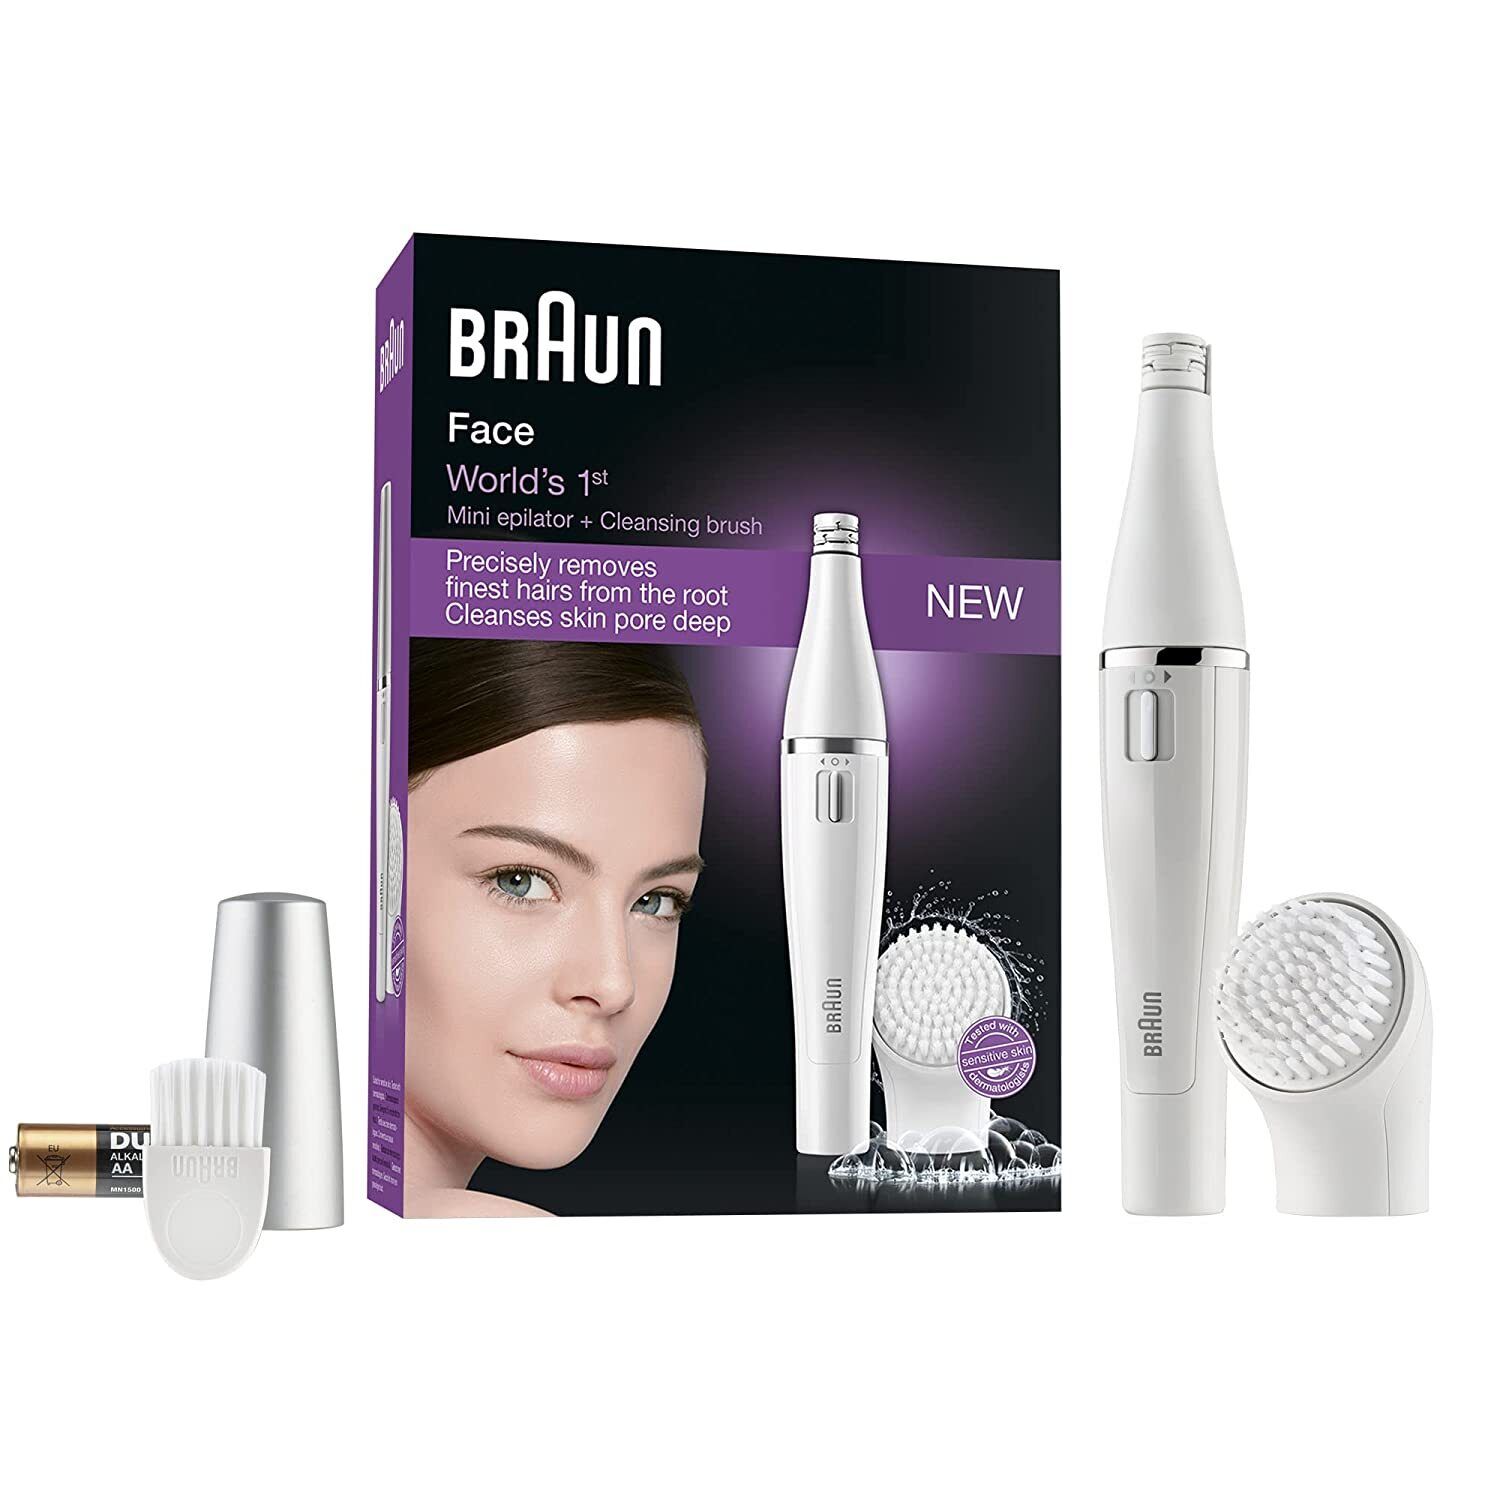 Bourgondië Garderobe Charlotte Bronte Braun Face 810 Facial Epilator & Cleansing Brush with Micro-Oscillations  (White) | eBay